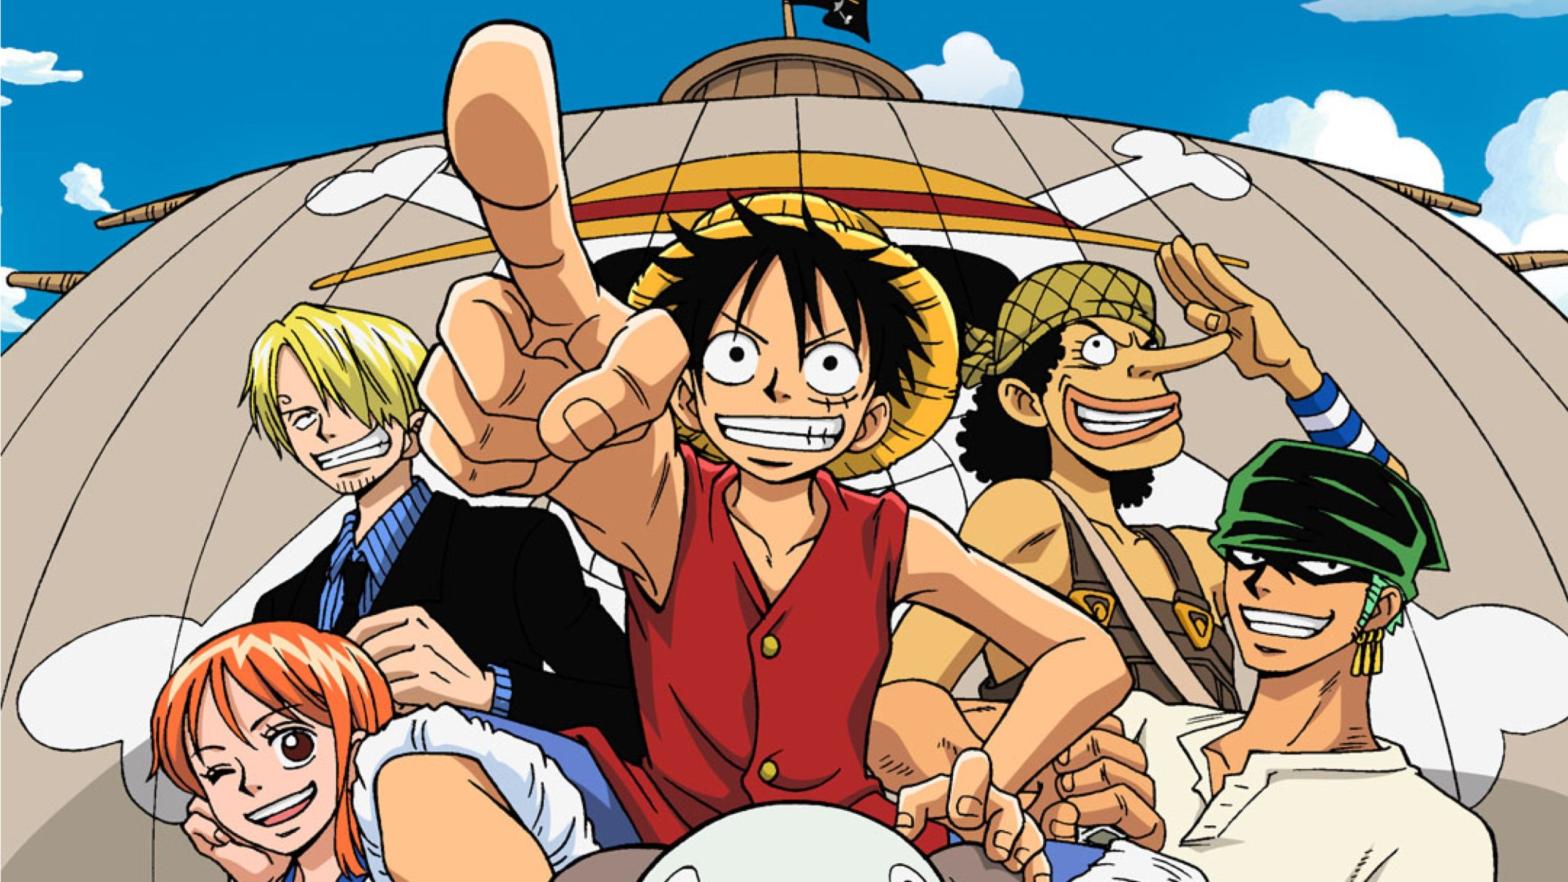 The Straw Hat crew, l-r: Nami, Sanji, Luffy, Usopp, and Zoro. (Image: Toei Animation/Funimation)